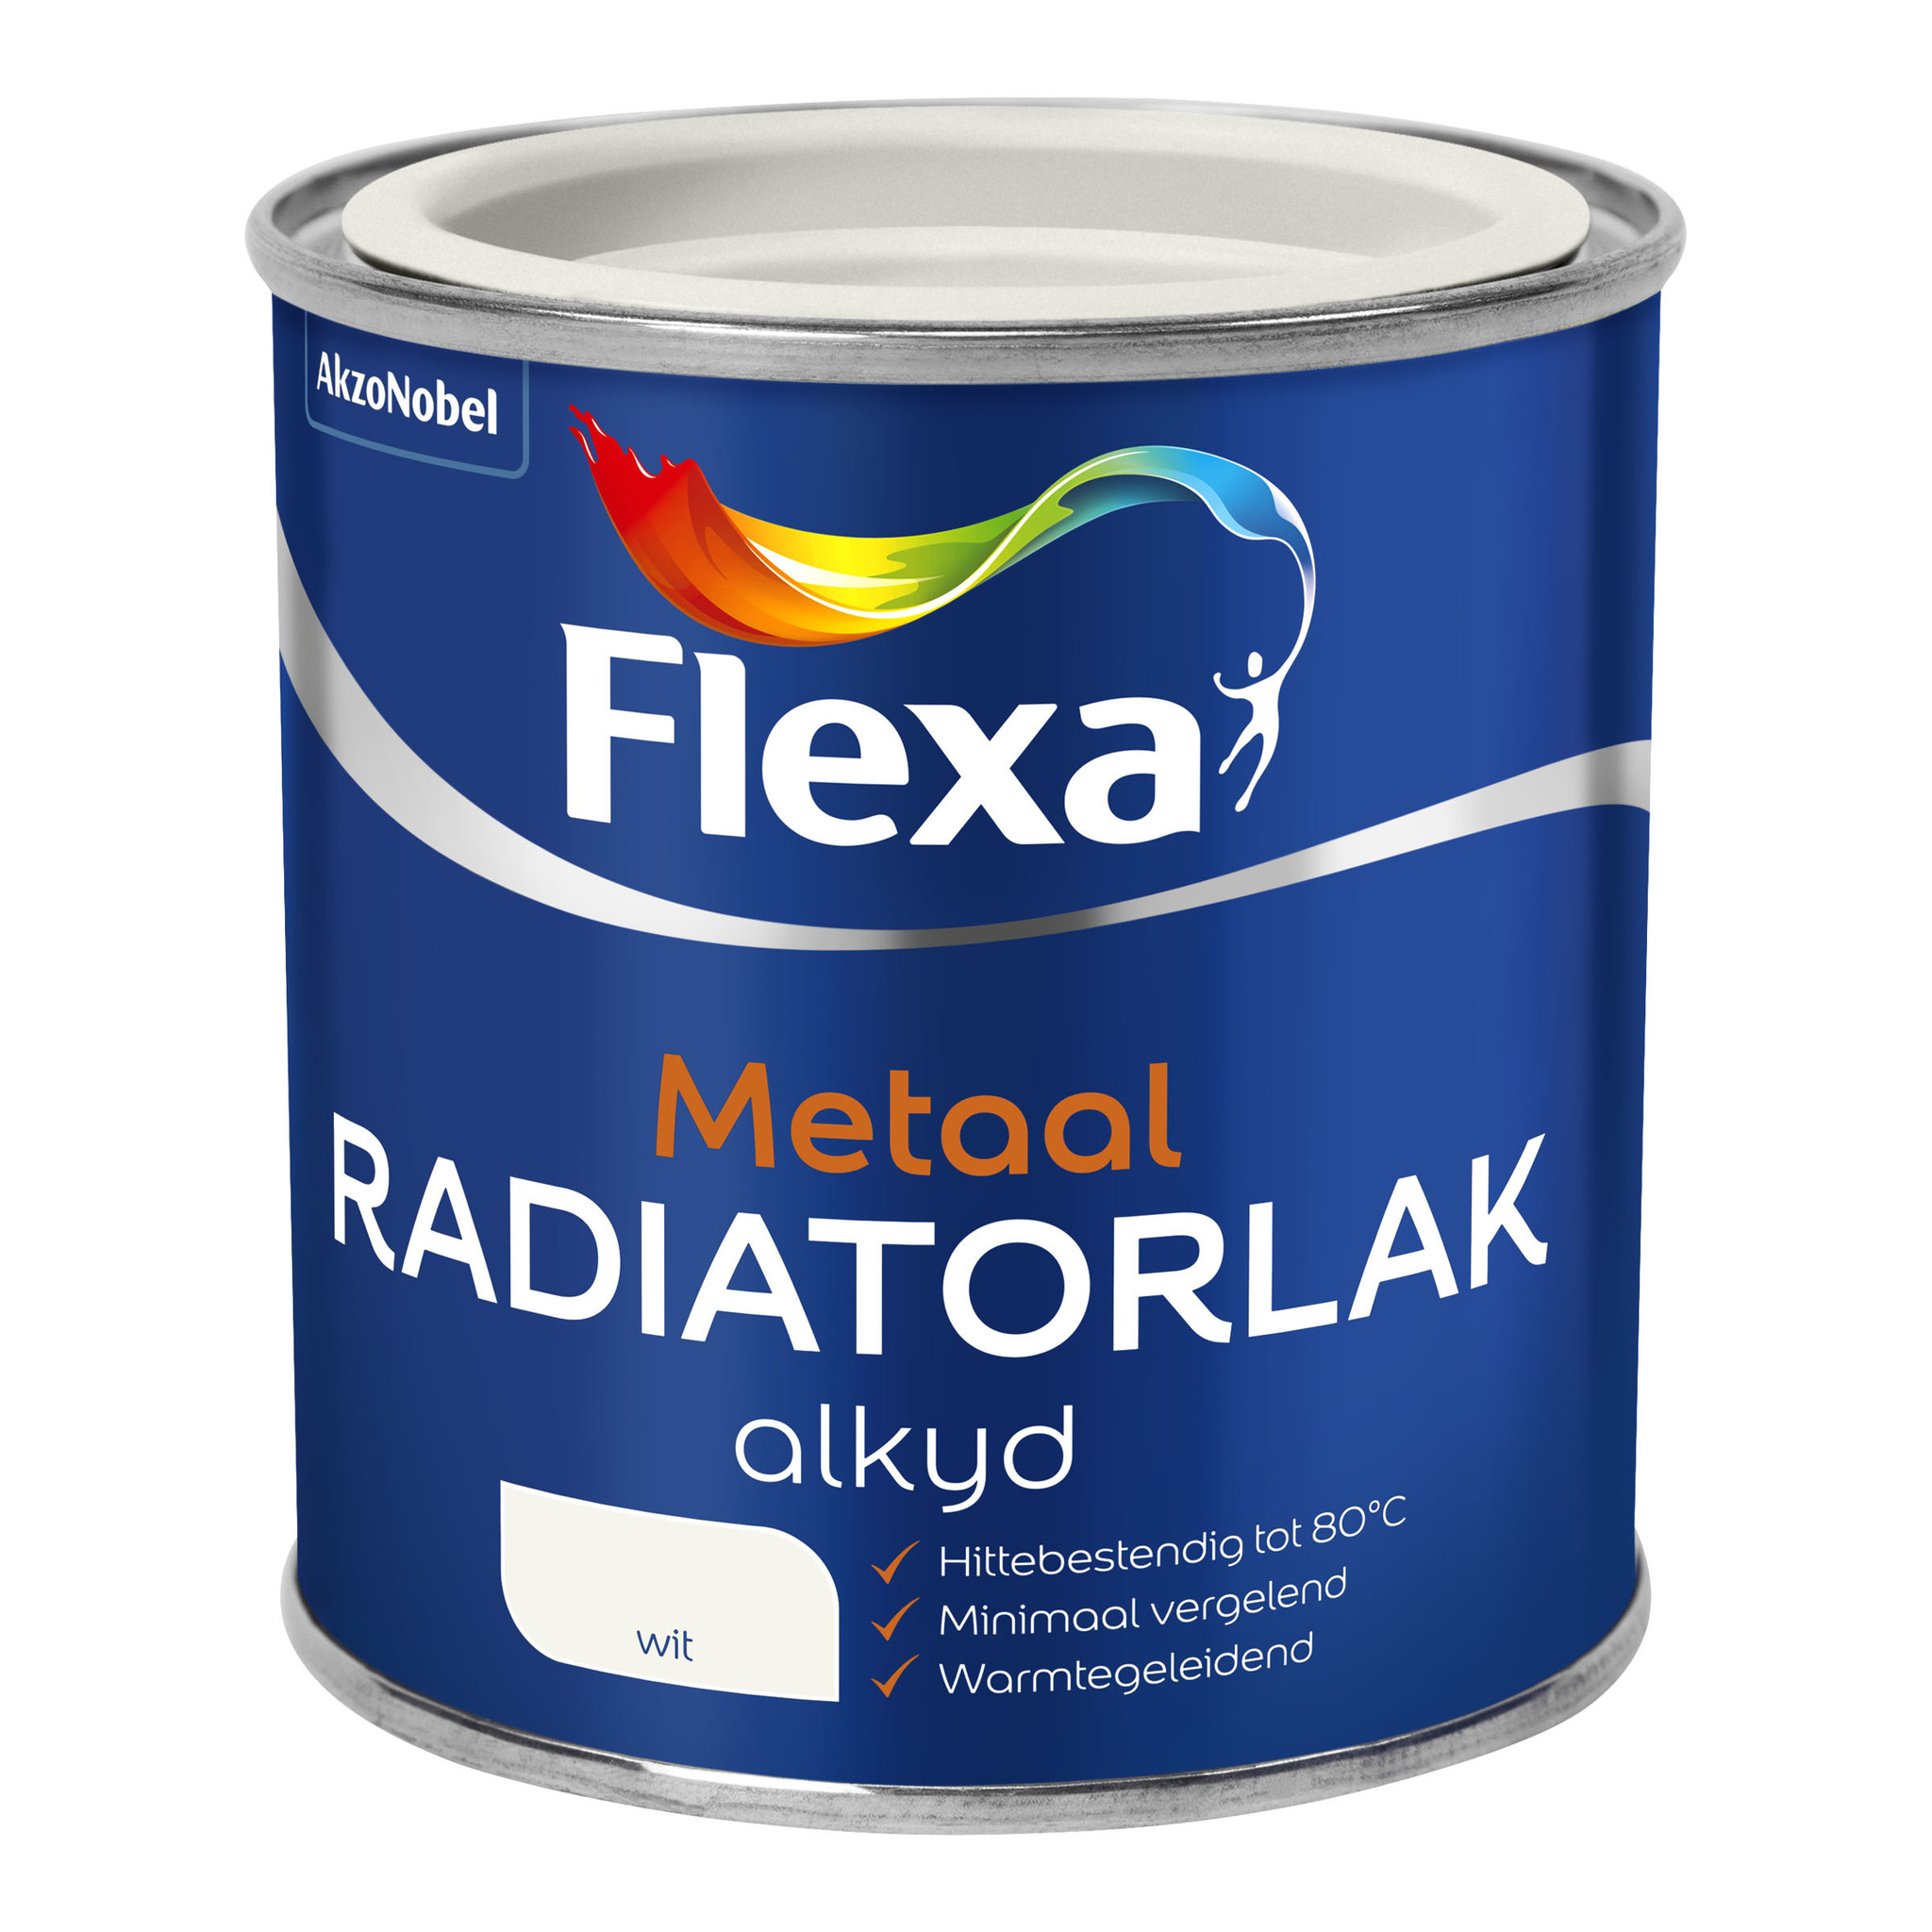 Flexa Radiatorlak Alkyd - Verfzaak